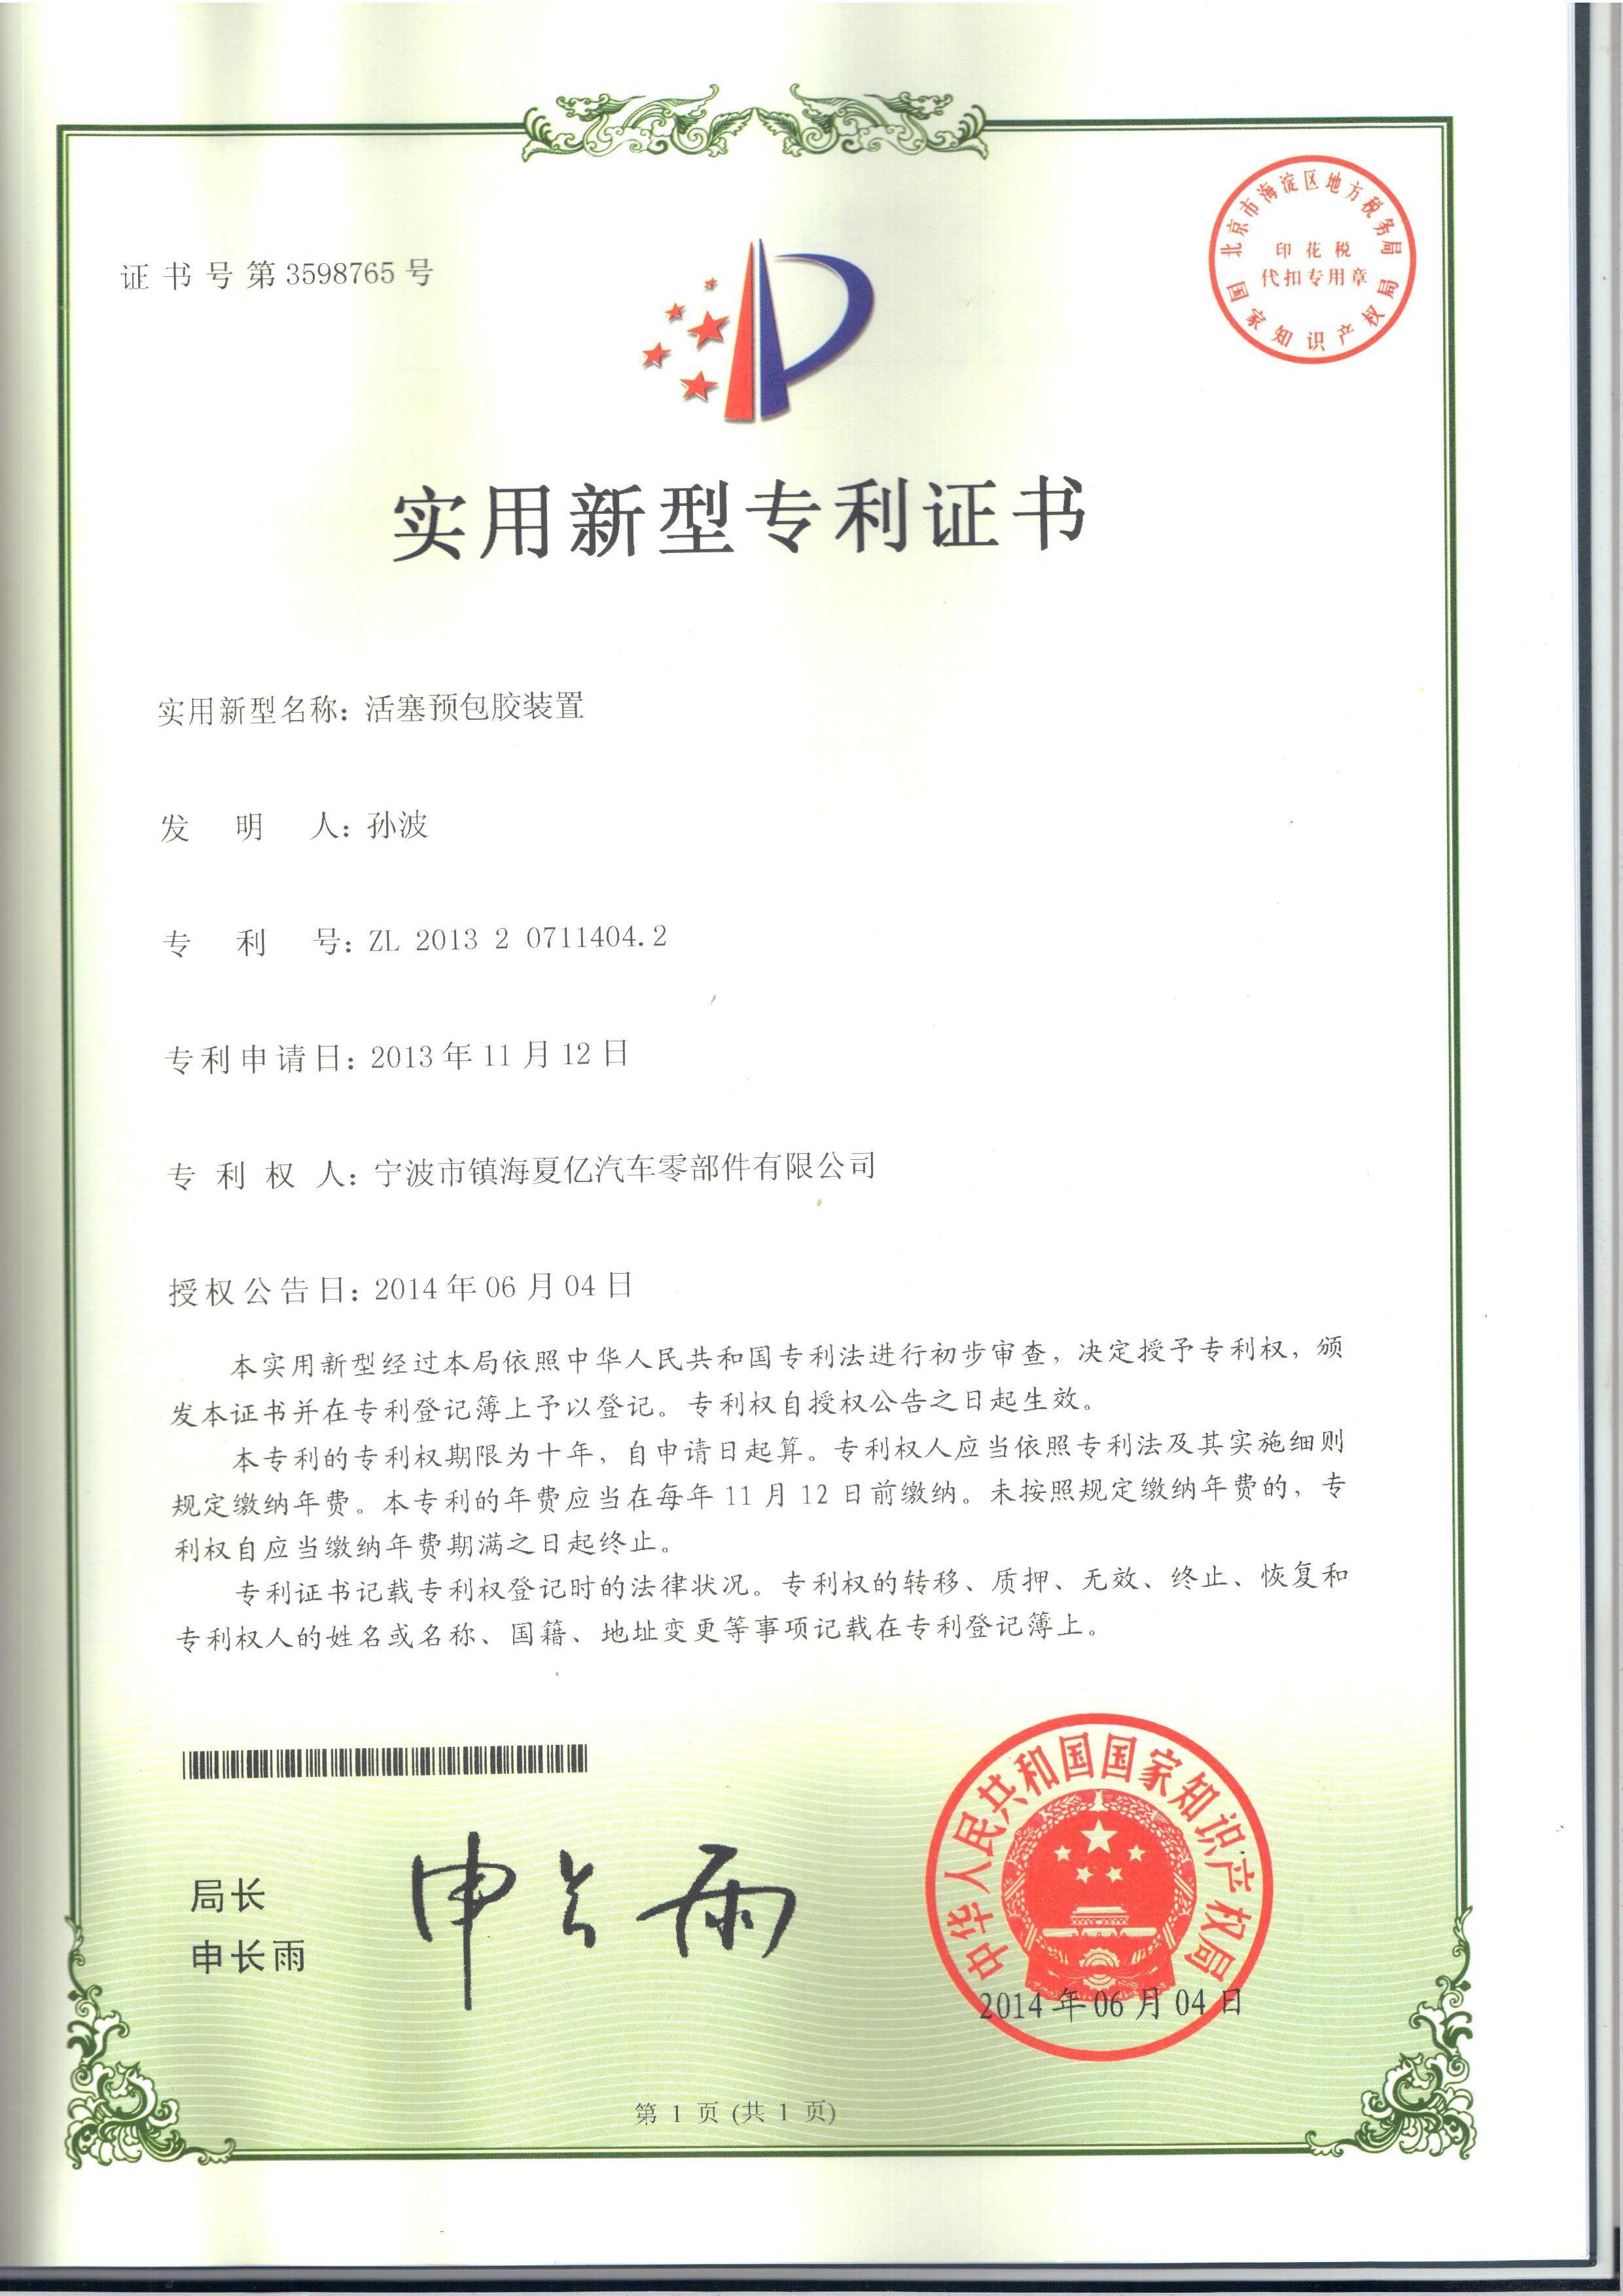 Chine Ningbo XiaYi Electromechanical Technology Co.,Ltd. Certifications